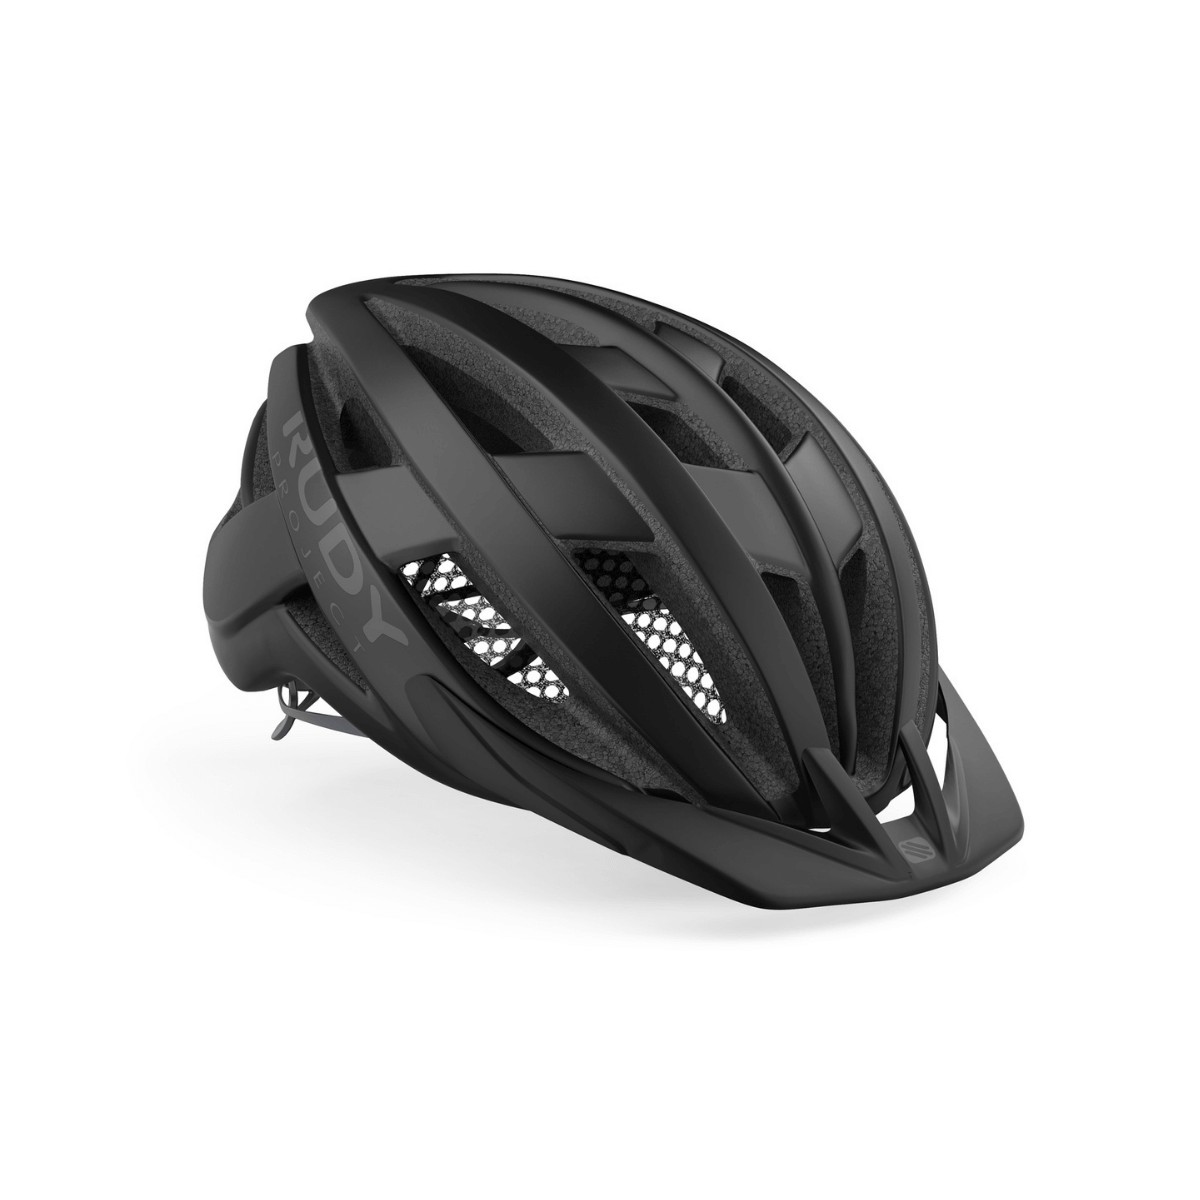 Rudy Project Venger Cross Helmet Matte Black, Size M